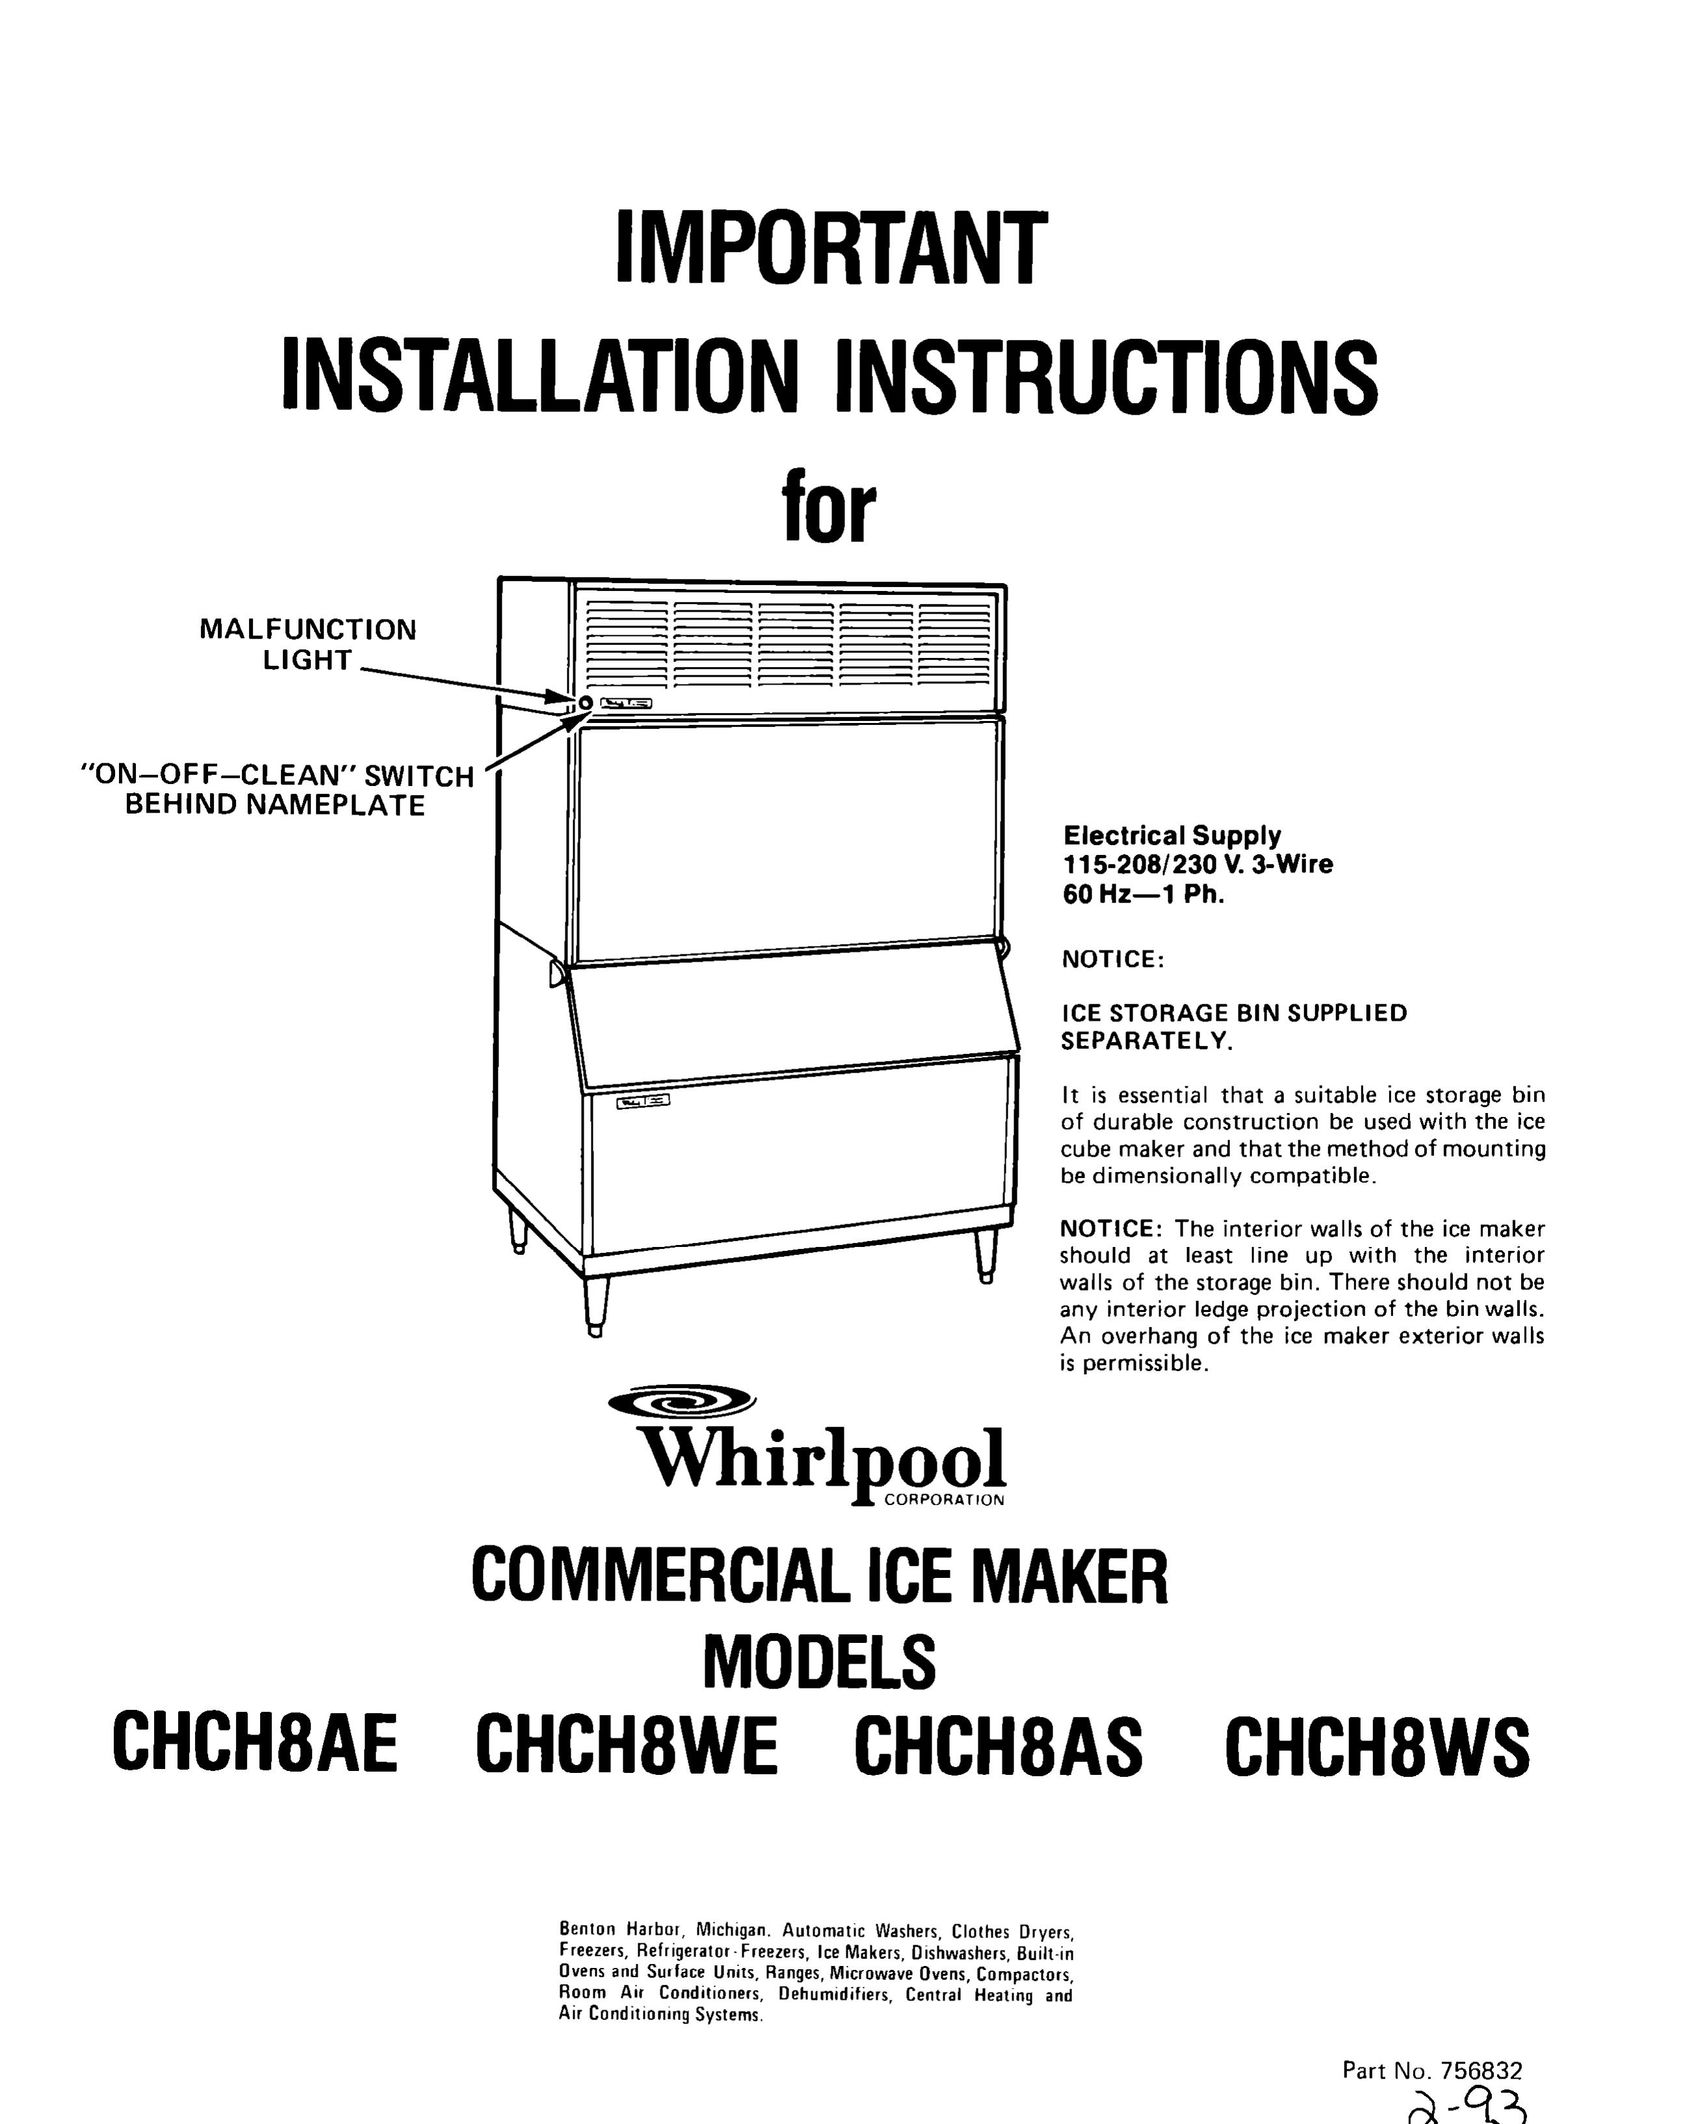 Whirlpool CHCH8AE Ice Maker User Manual